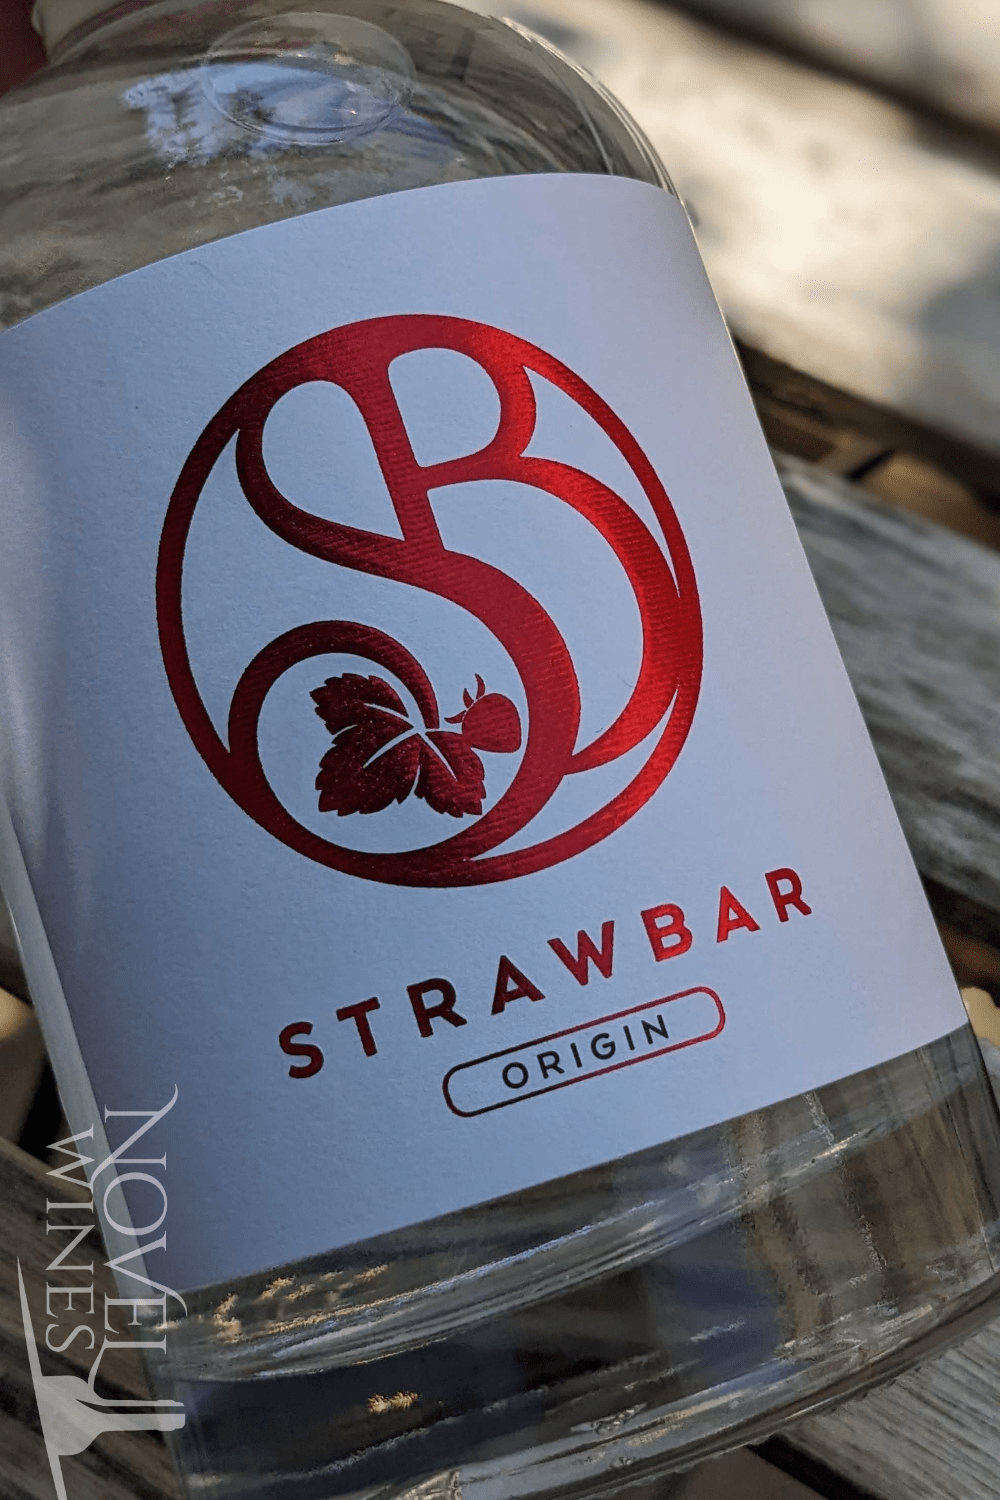 Strawbar Eau de Vie Strawbar Origin 40.0% abv, Greece